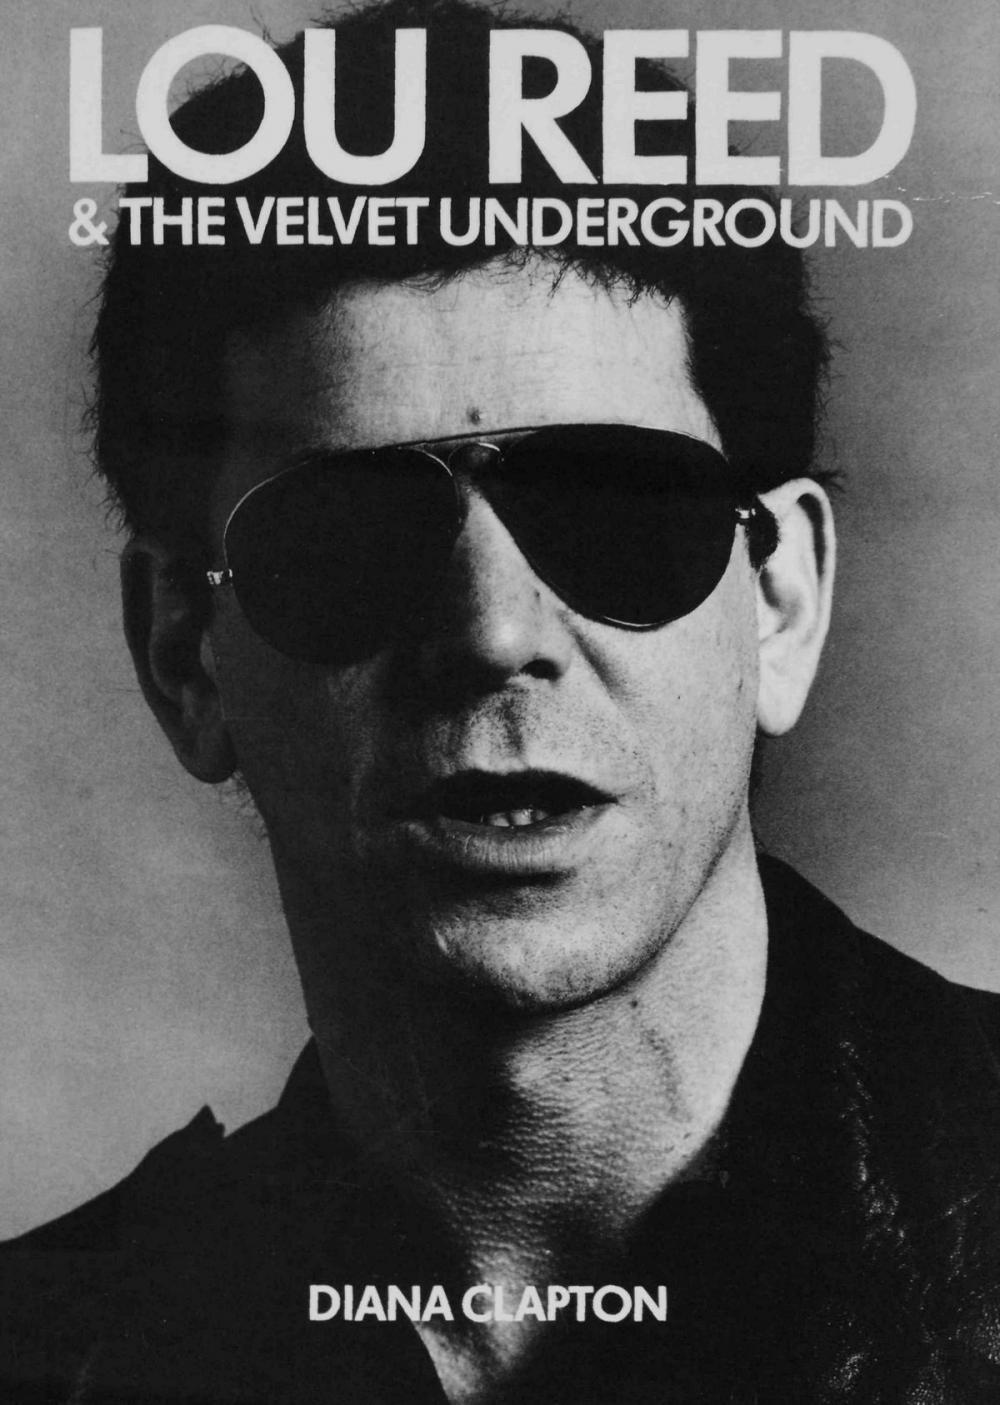 Big bigCover of Lou Reed & The Velvet Undergroud